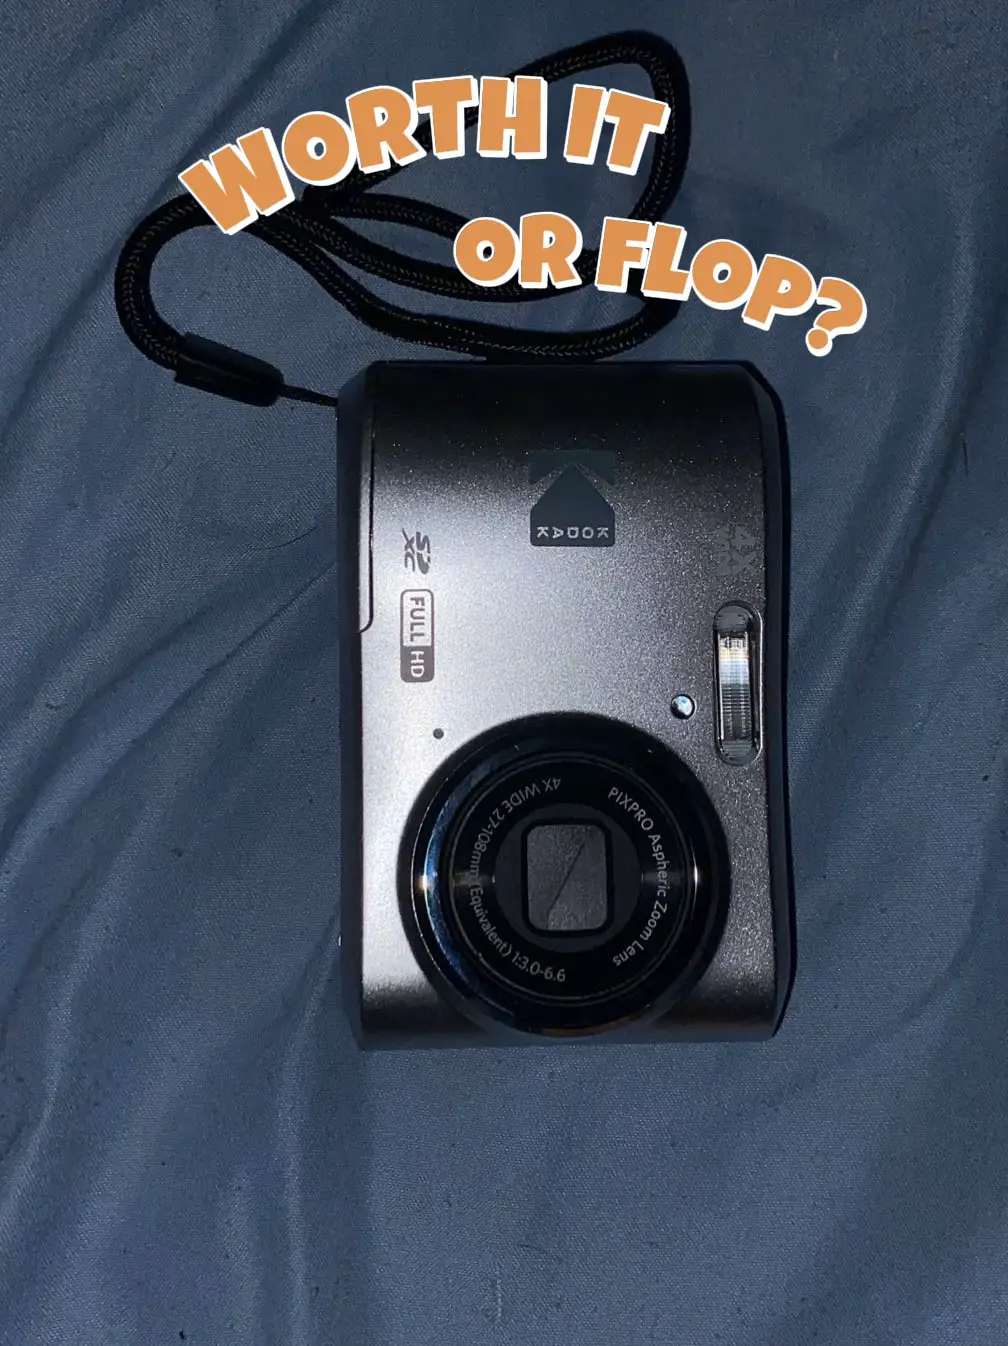 Kodak Pixpro Friendly Zoom Fz53 Digital Camera (black) With Accessory  Bundle : Target